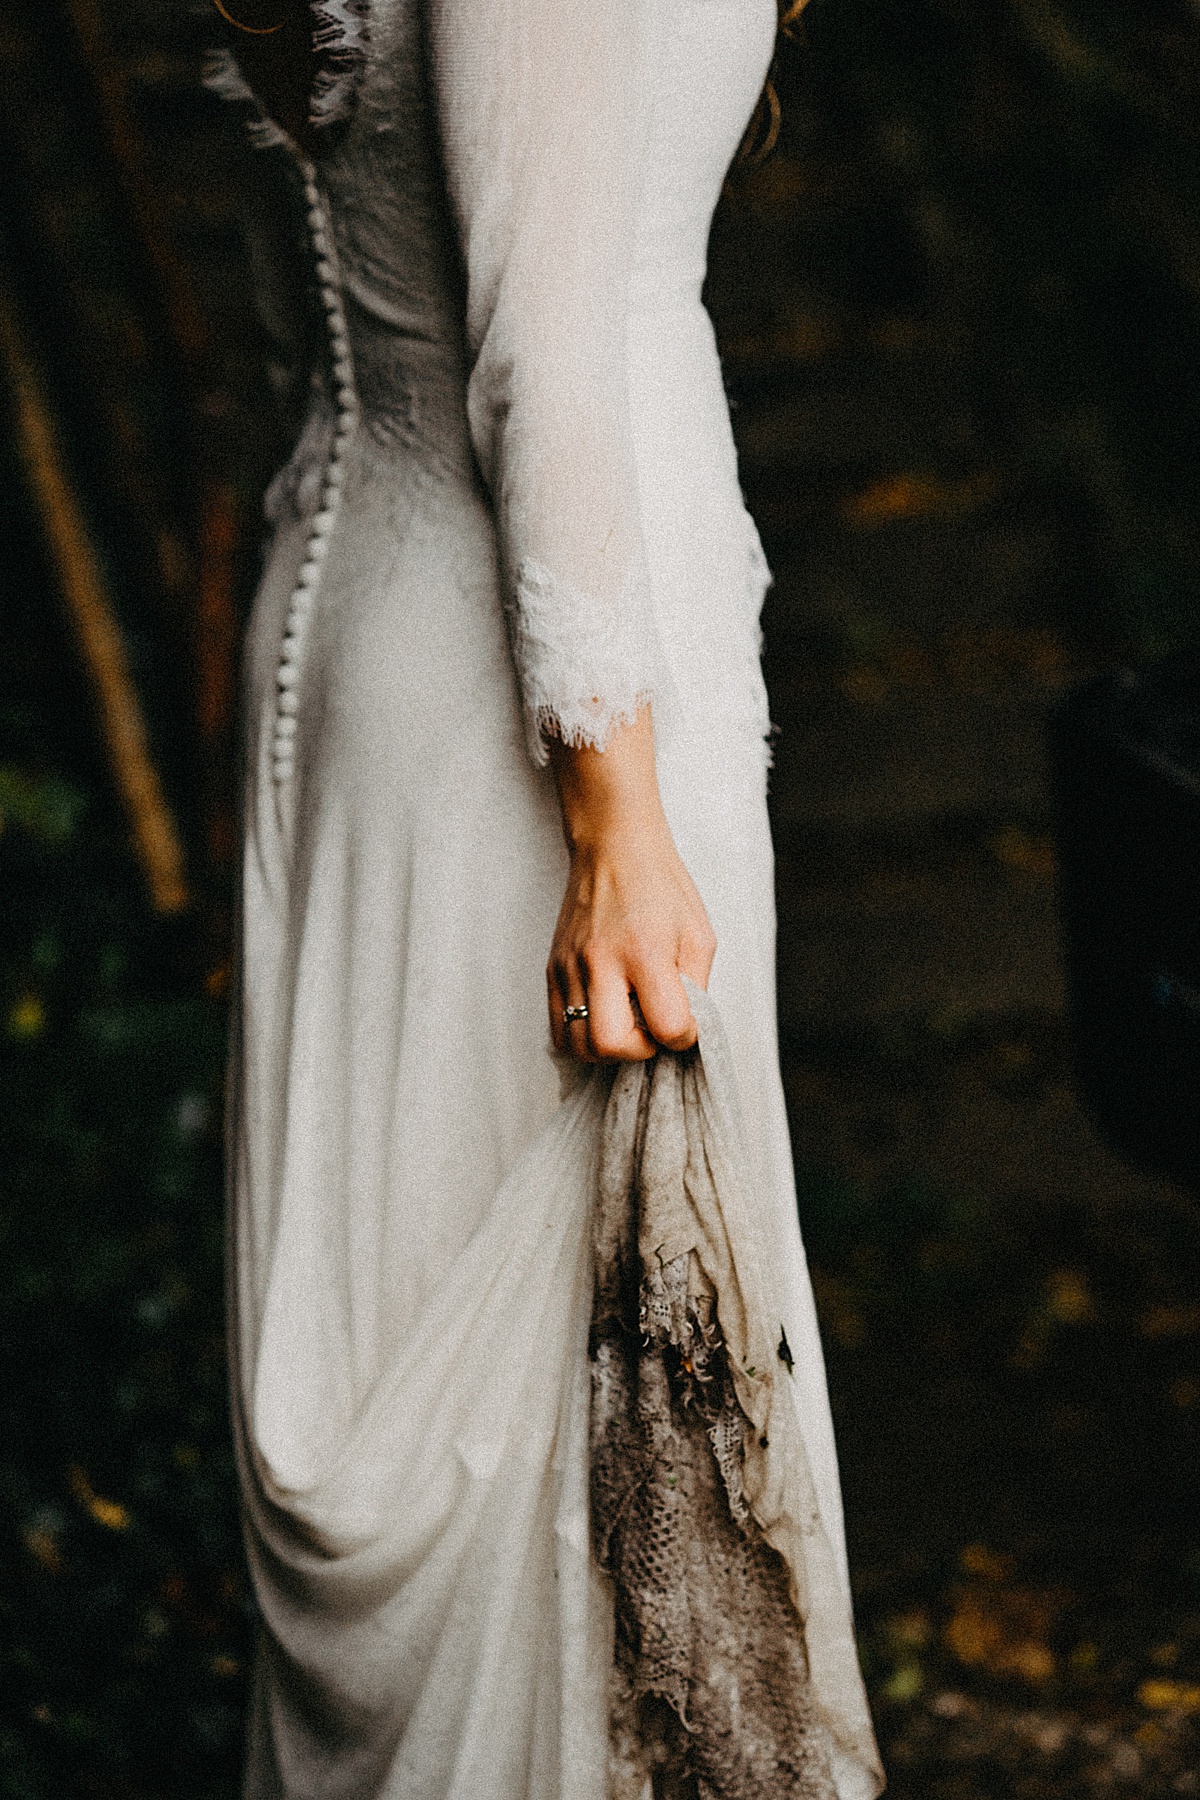 Muddy wedding dress from a rainy wedding day.